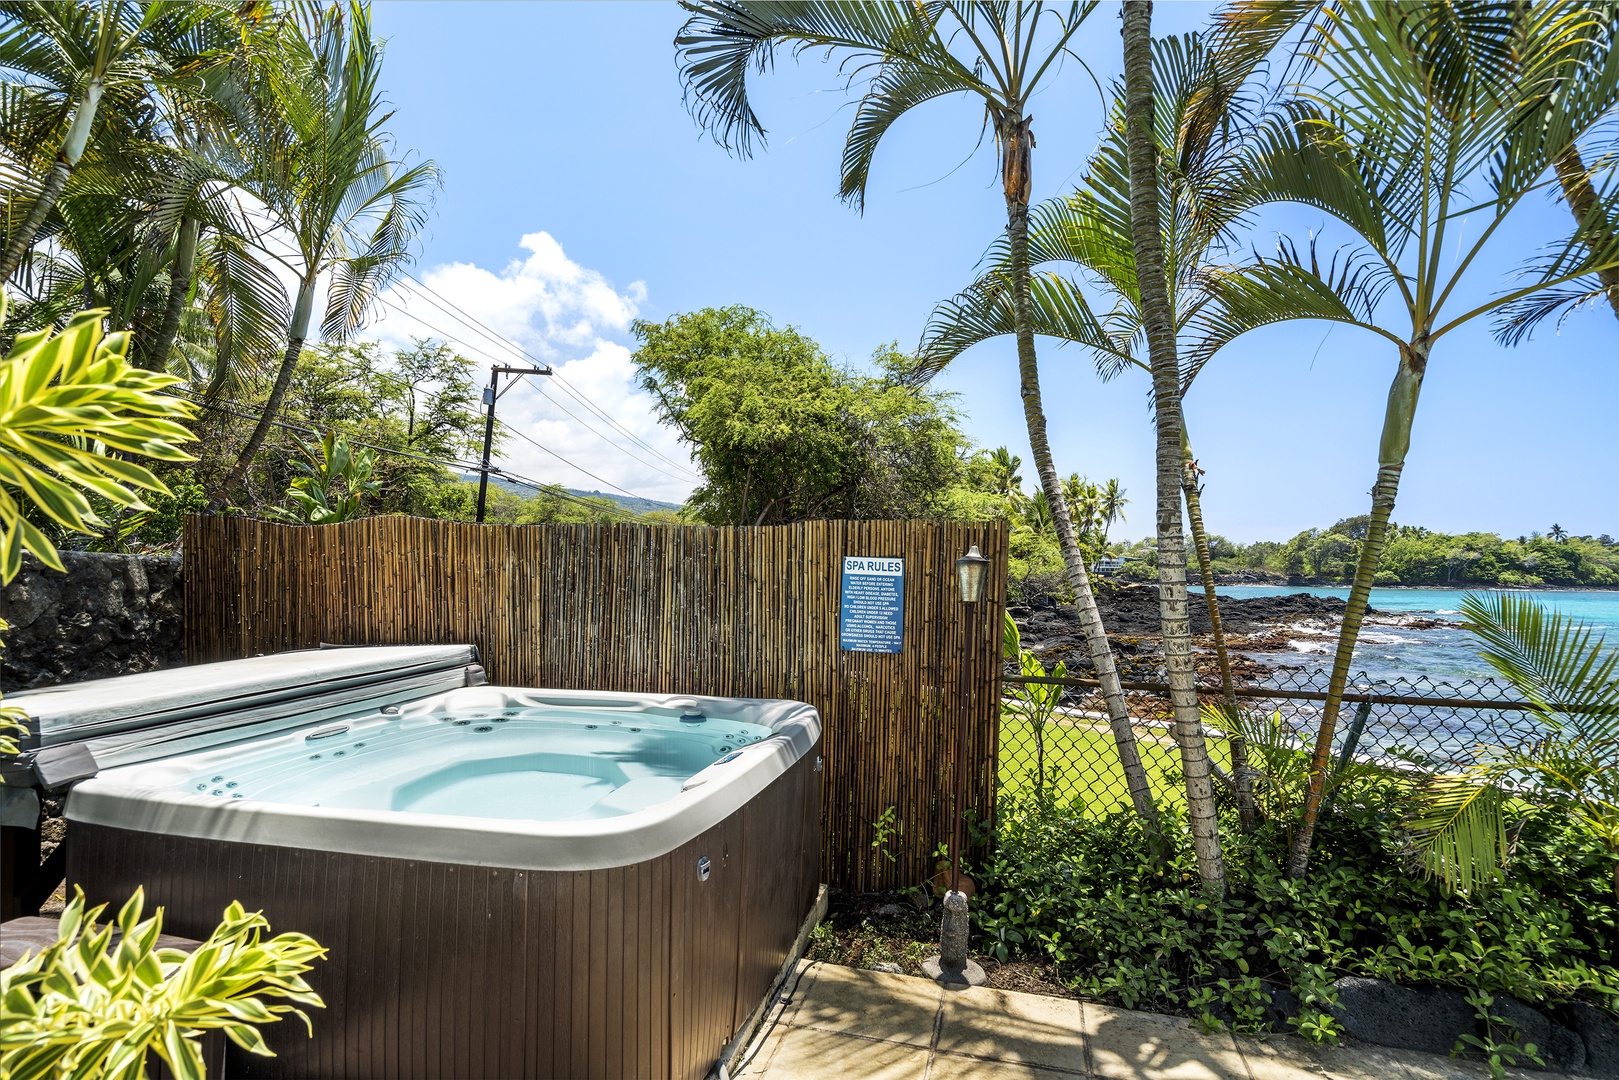 Kailua Kona Vacation Rentals, Kona's Shangri La - Above ground hot tub for your enjoyment!